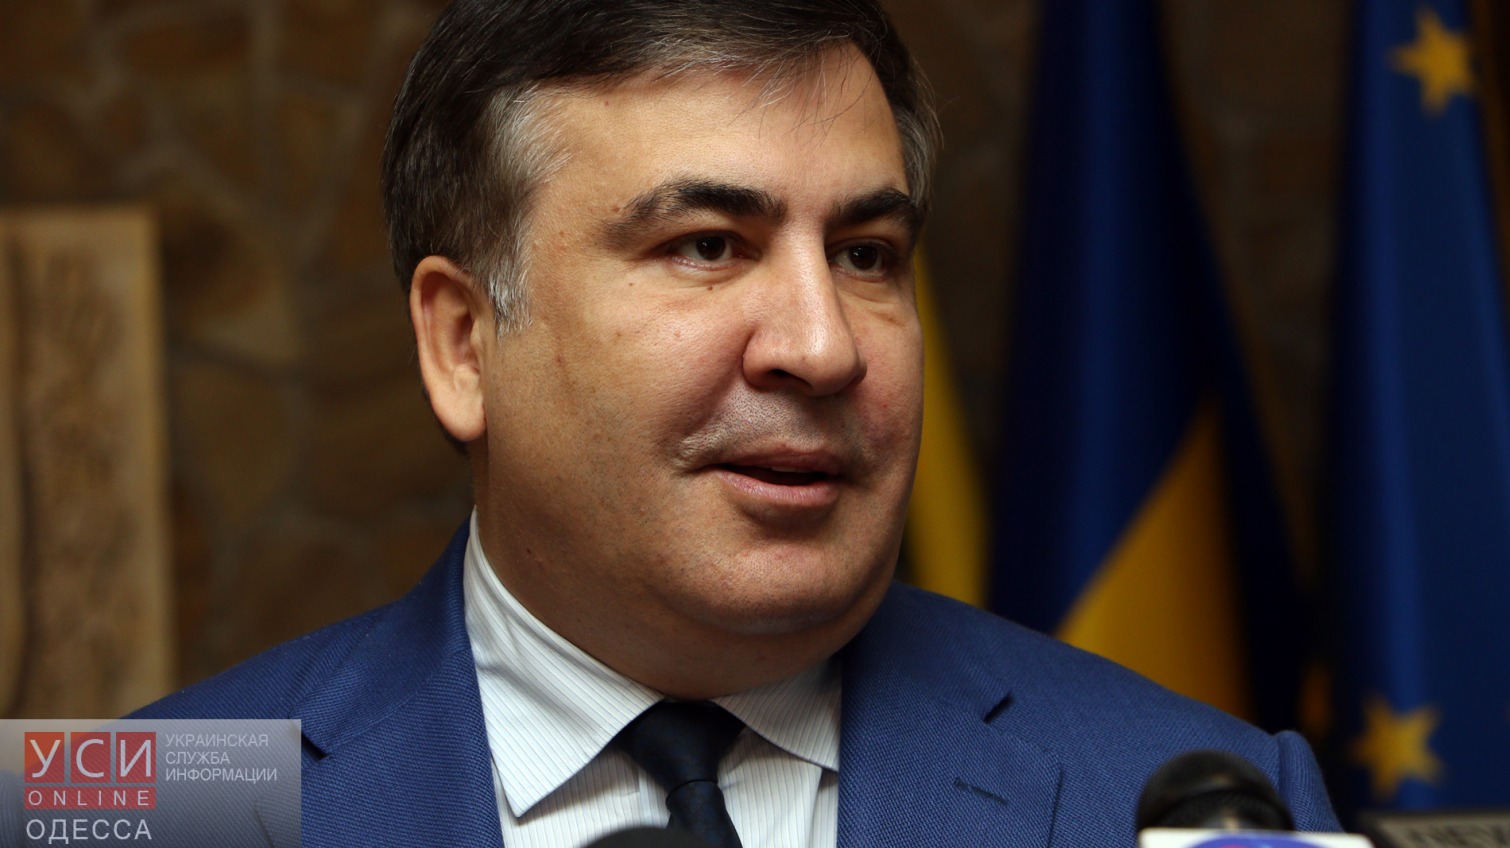 Михаил Саакашвили: Нас дурят, как котят «фото»